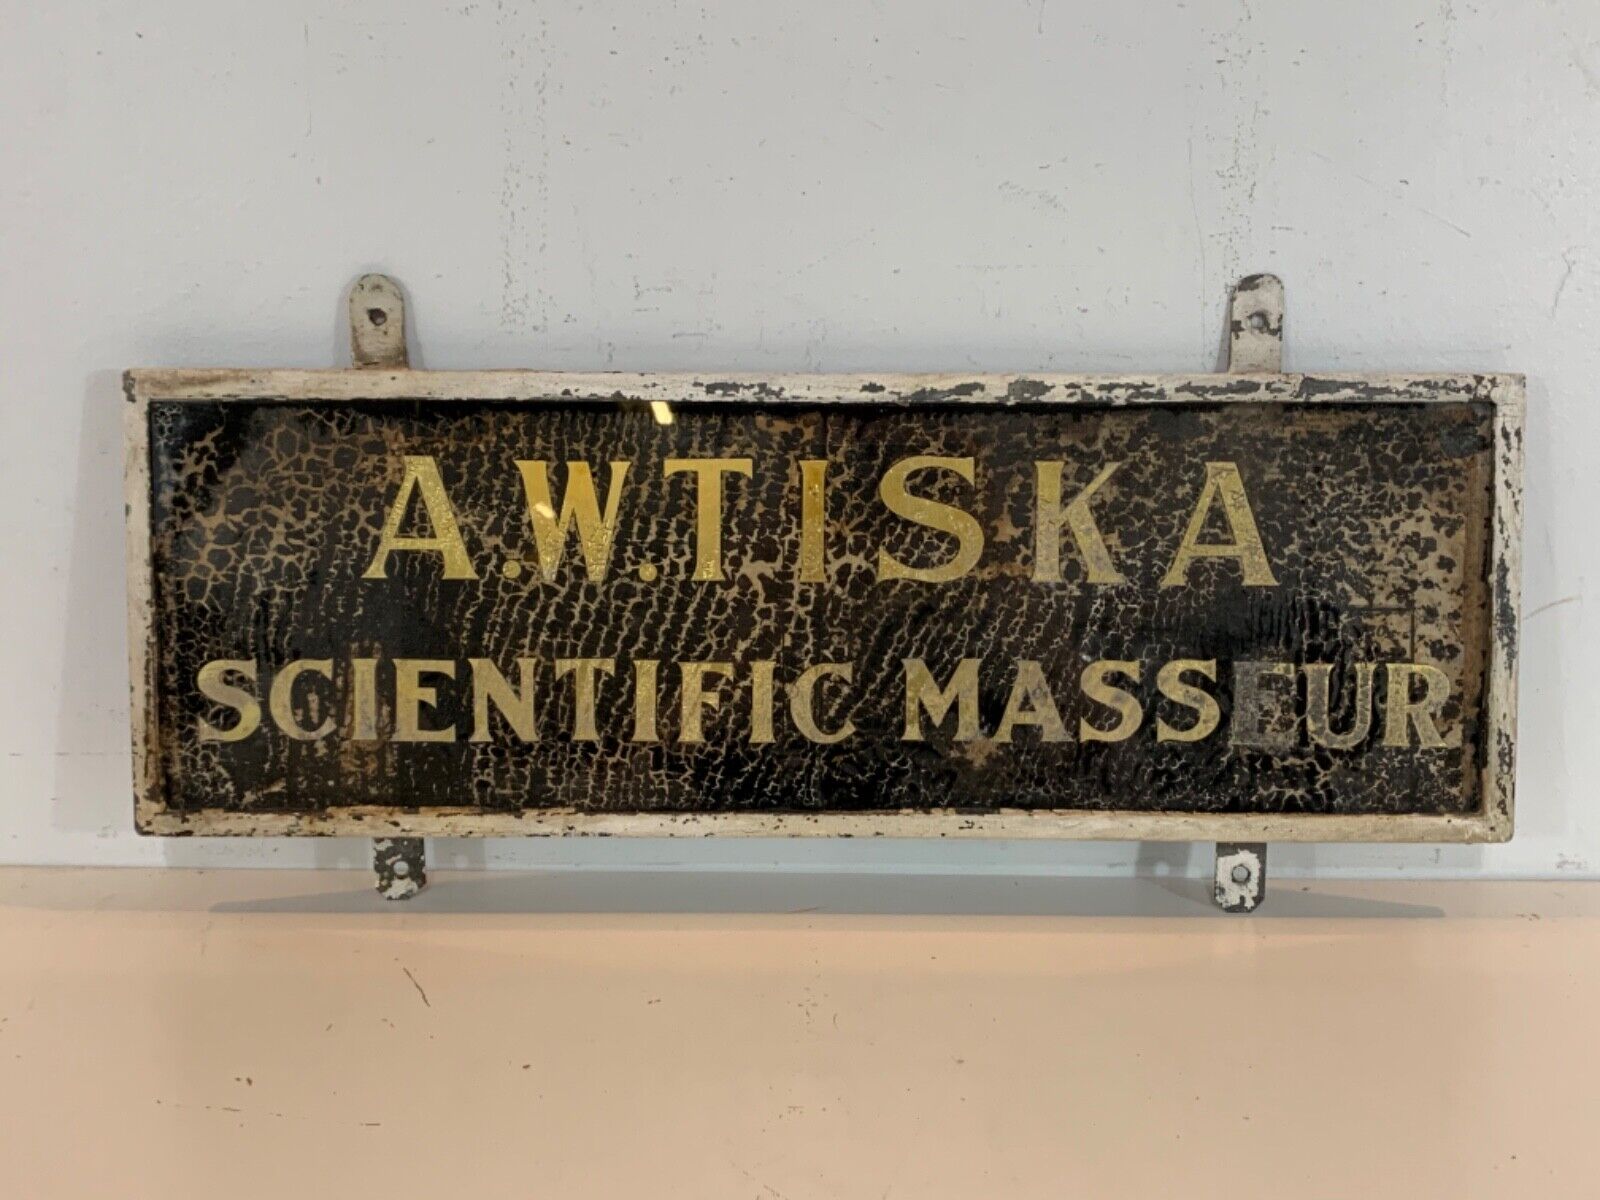 Ant Early 19th c. “A.W. Tiska Scientific Masseur” Male Masseuse Rare Trade Sign